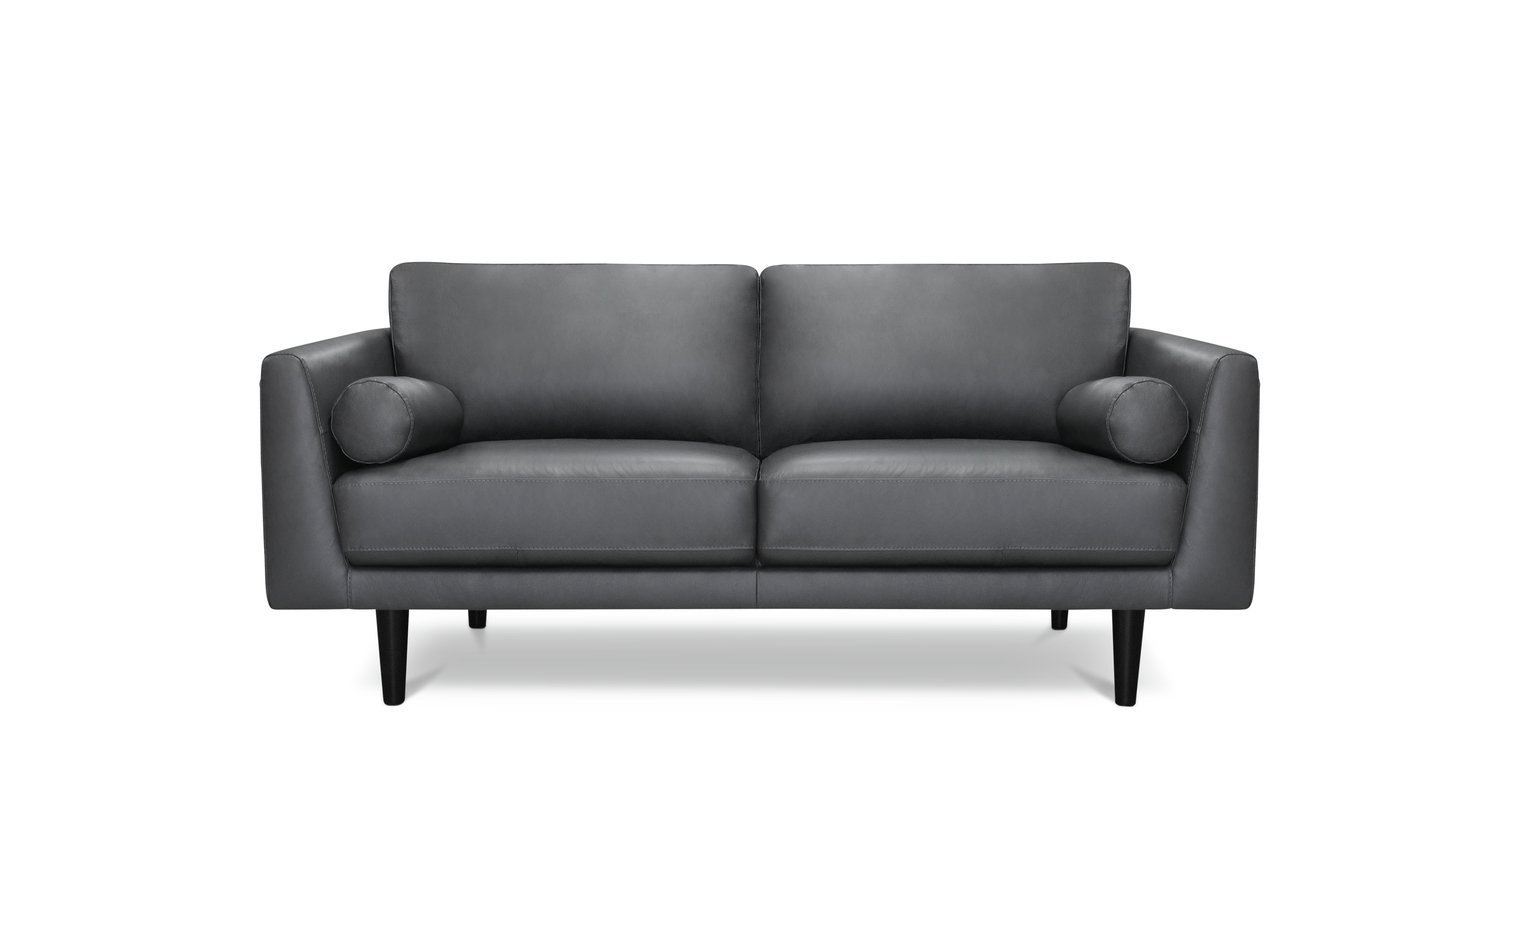 Habitat Jackson Leather 3 Seater Sofa - Grey